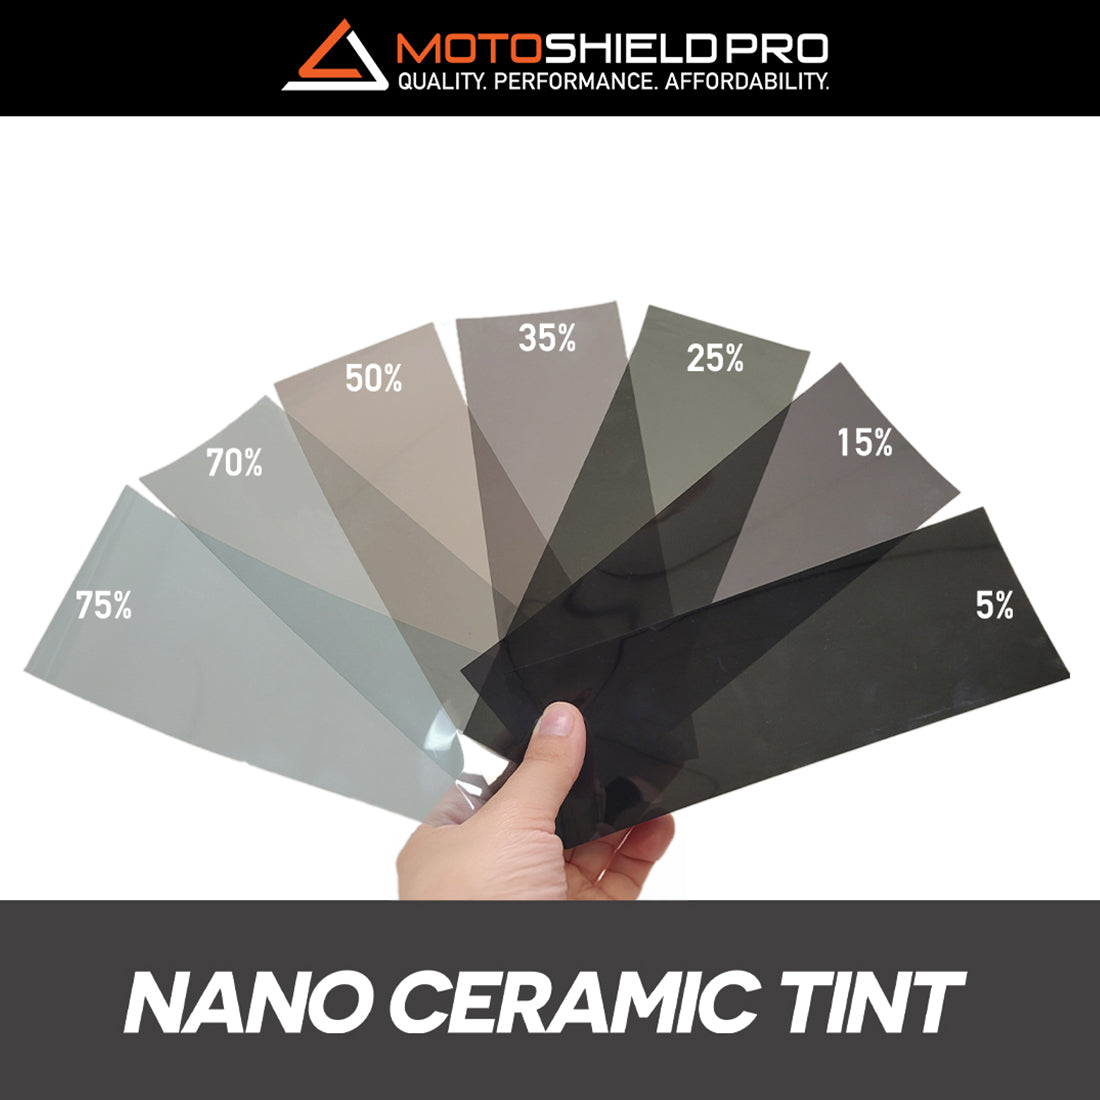 Nano ceramic tint for the 2017 WRX and STI, providing superior heat rejection and UV protection.